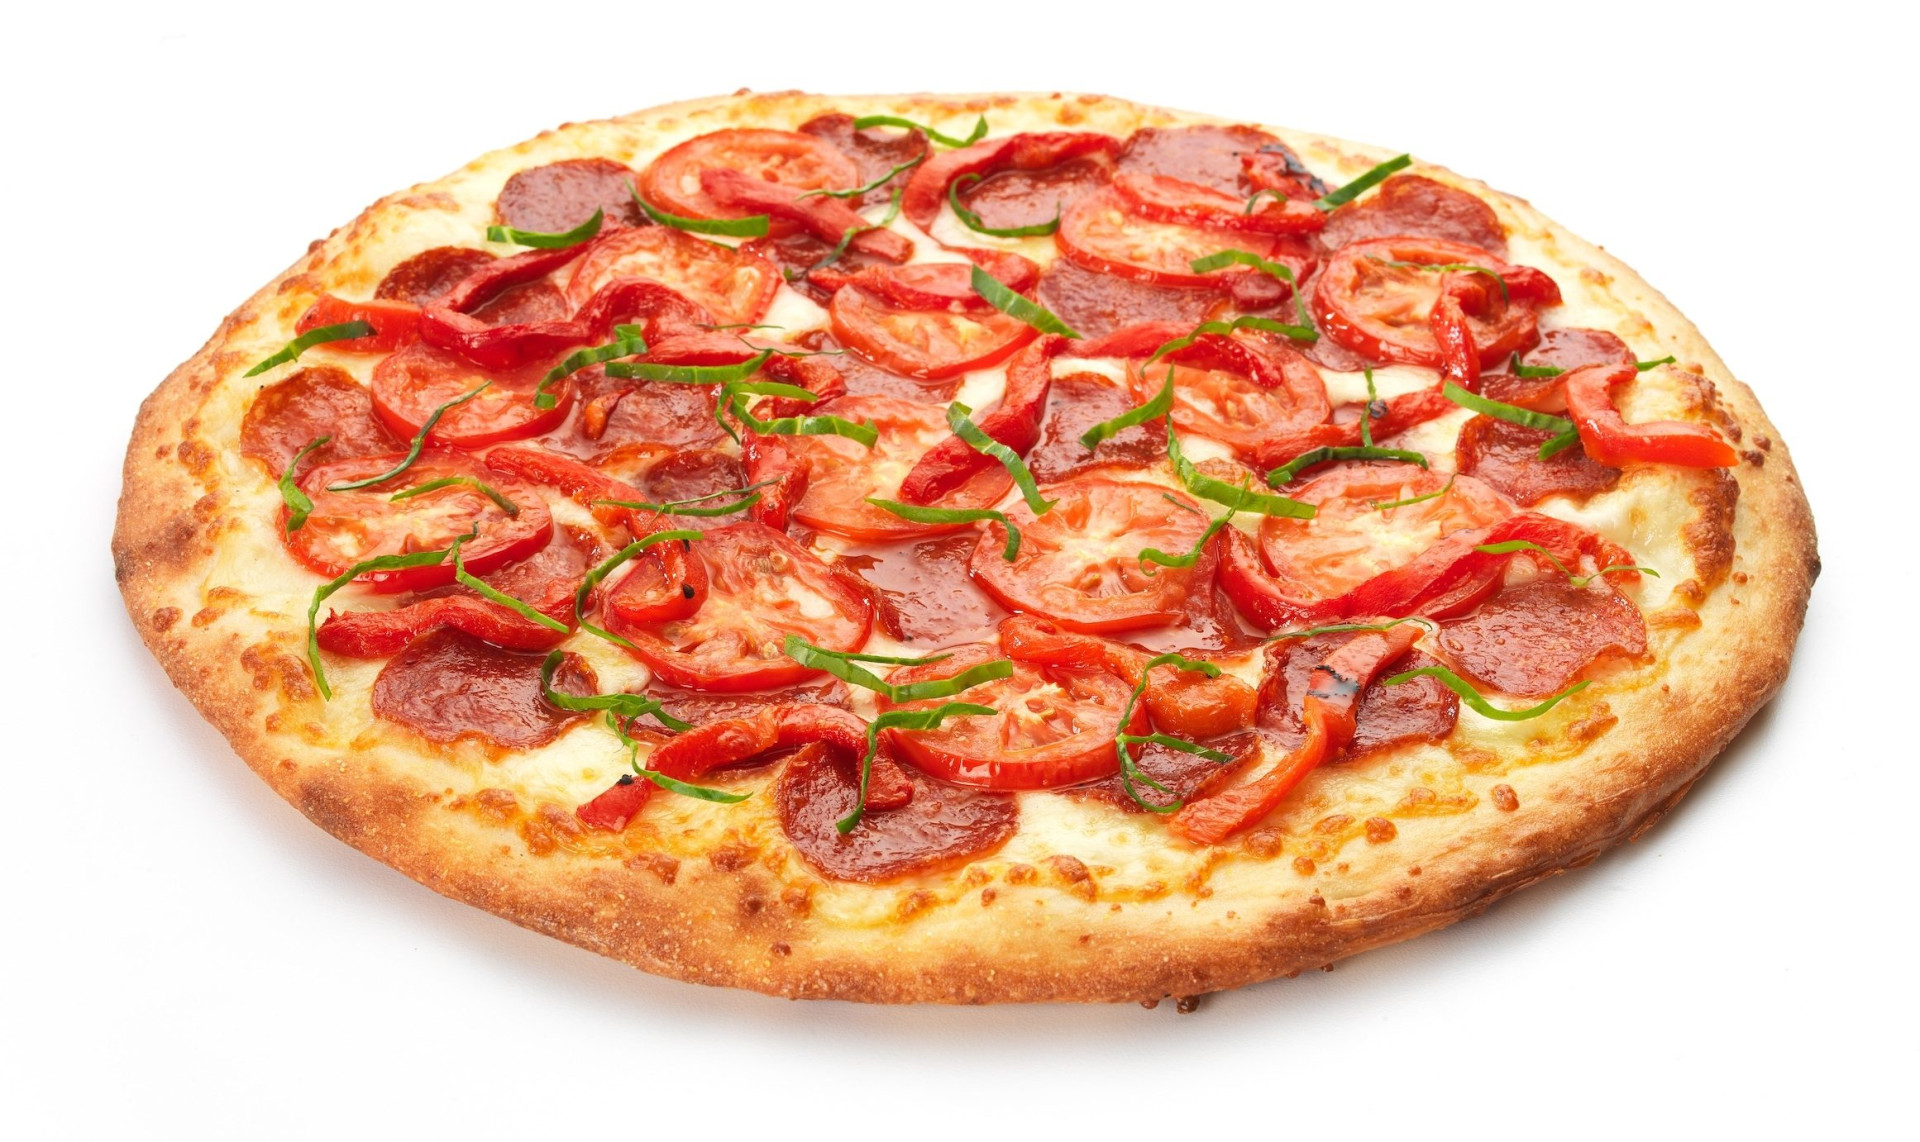 пицца пепперони фото на белом фоне фото 35